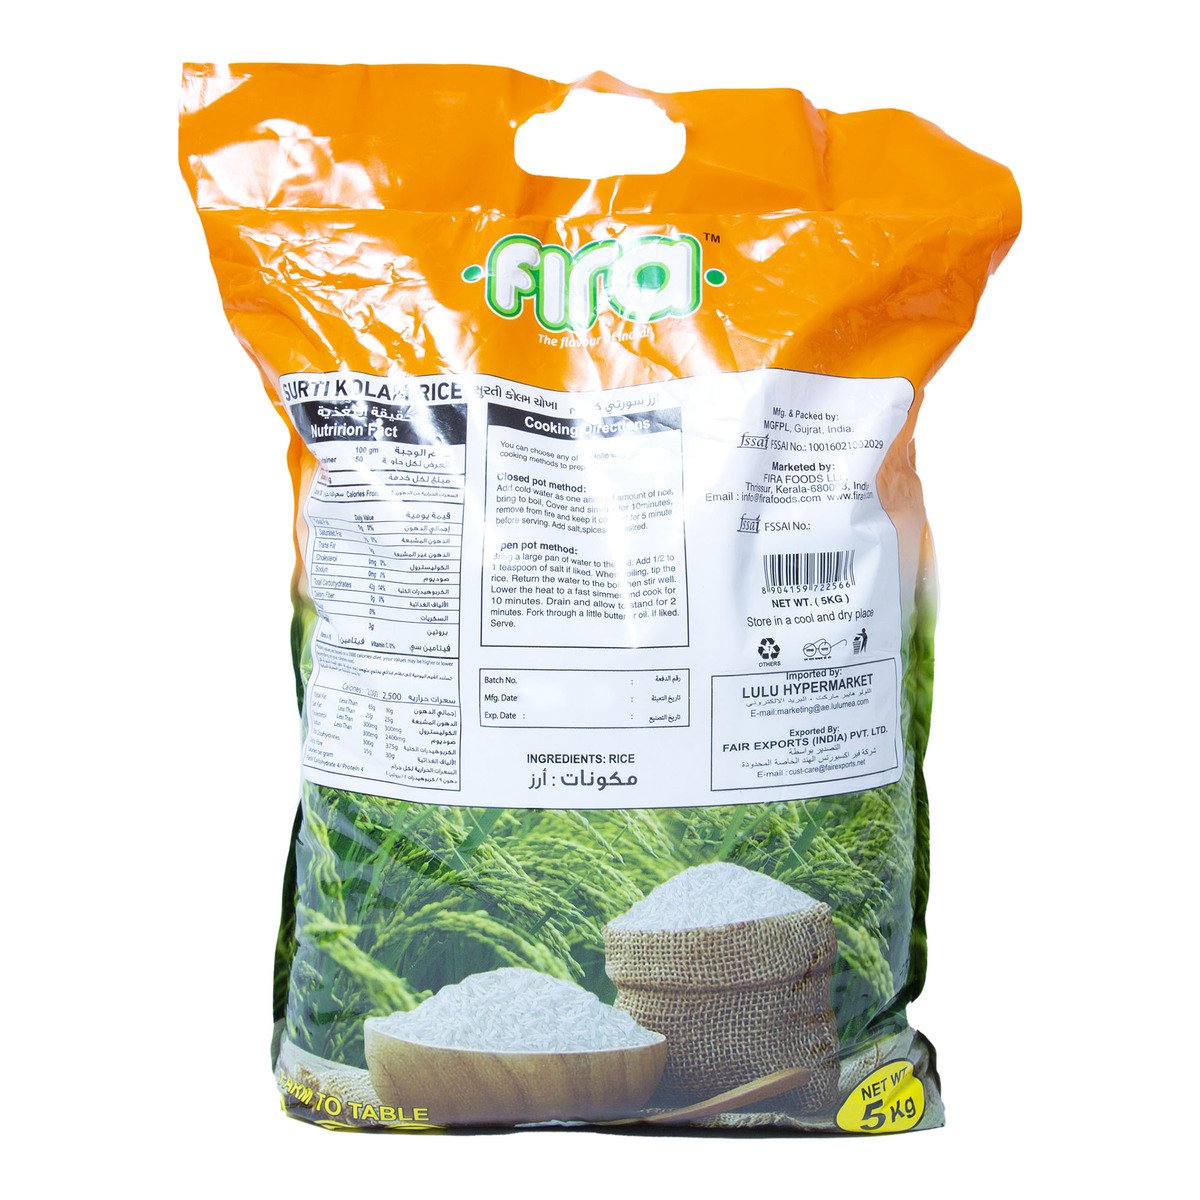 Fira Surti Kolam Rice 5 kg